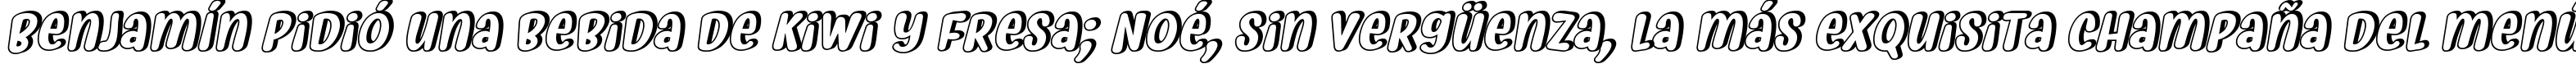 Пример написания шрифтом Myfrida Shadow Italic текста на испанском